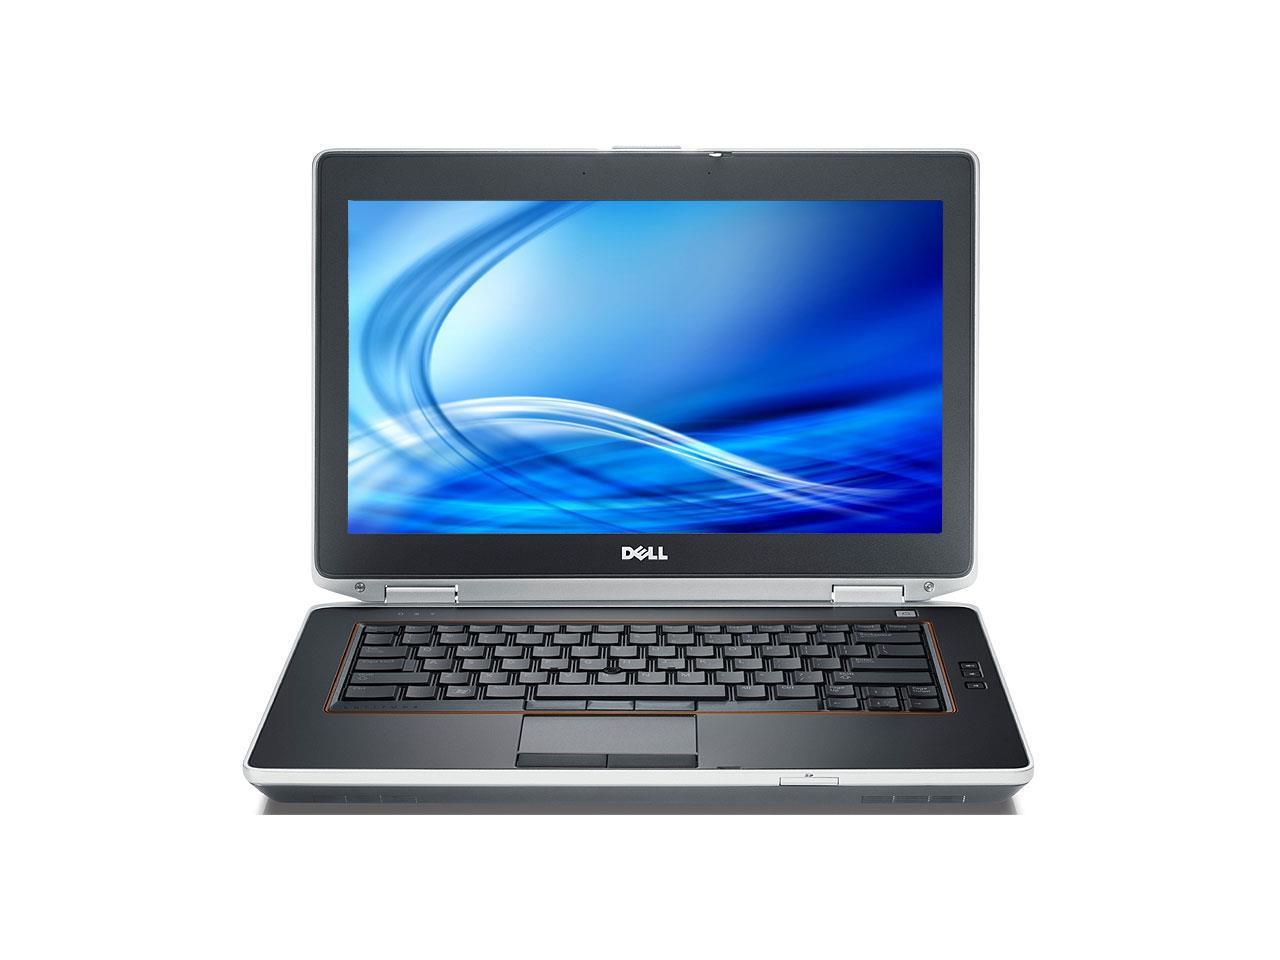 Dell Latitude E6430 Intel i5 Dual Core 2700 MHz 250Gig Serial ATA 8GB DVD-RW 14.0" WideScreen LCD Windows 10 Professional 64 Bit Laptop Notebook